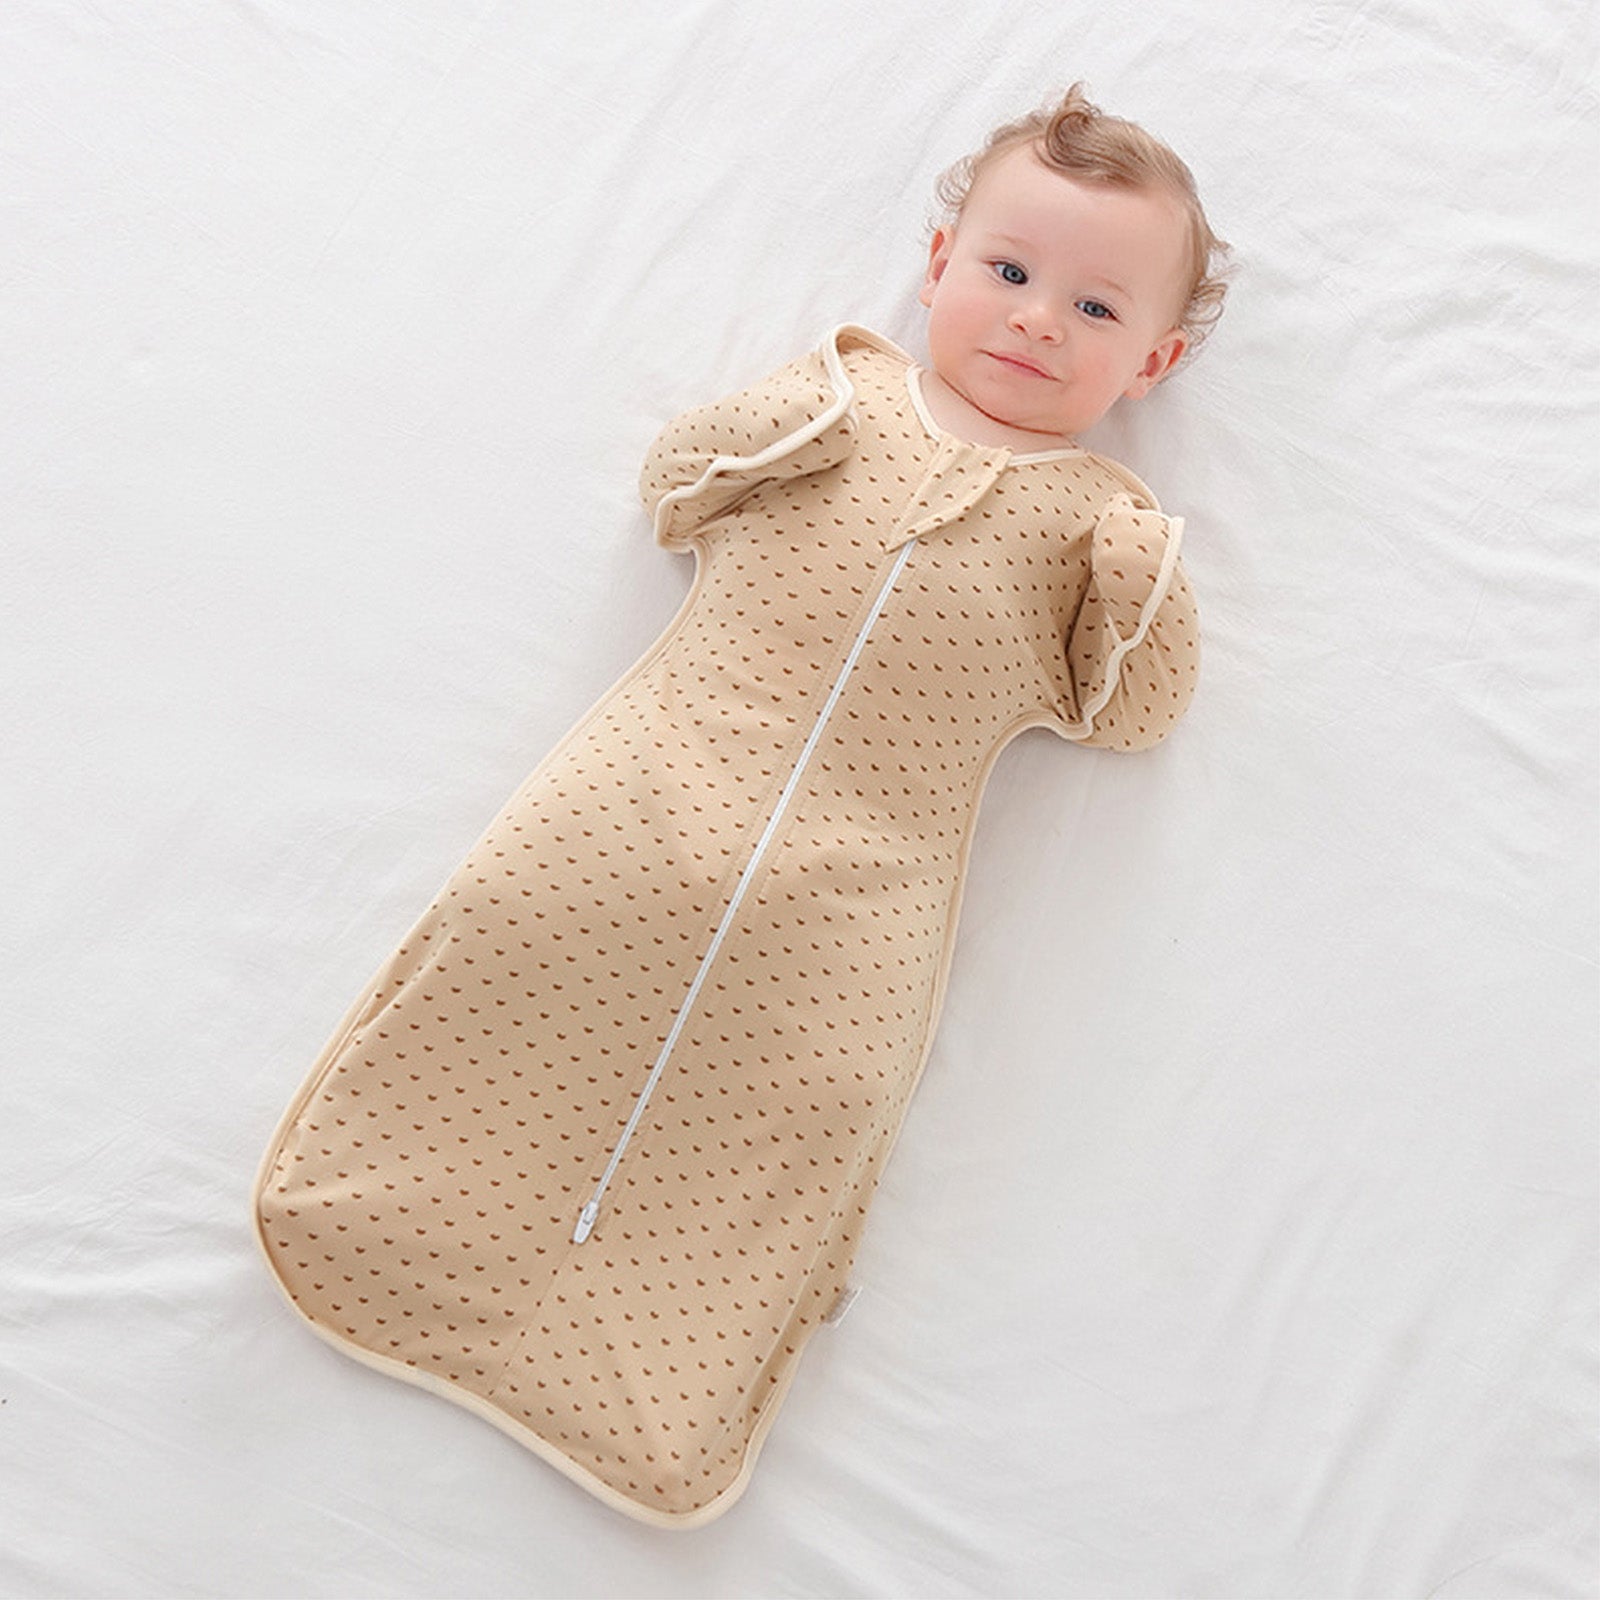 Tiny cuddling Sleepsack Swaddle, Modal Fbric fit High Elastic, Anti-startle Design Sack Blanket, TOG 0.5, Medium, 3-6 Months, 35*70cm